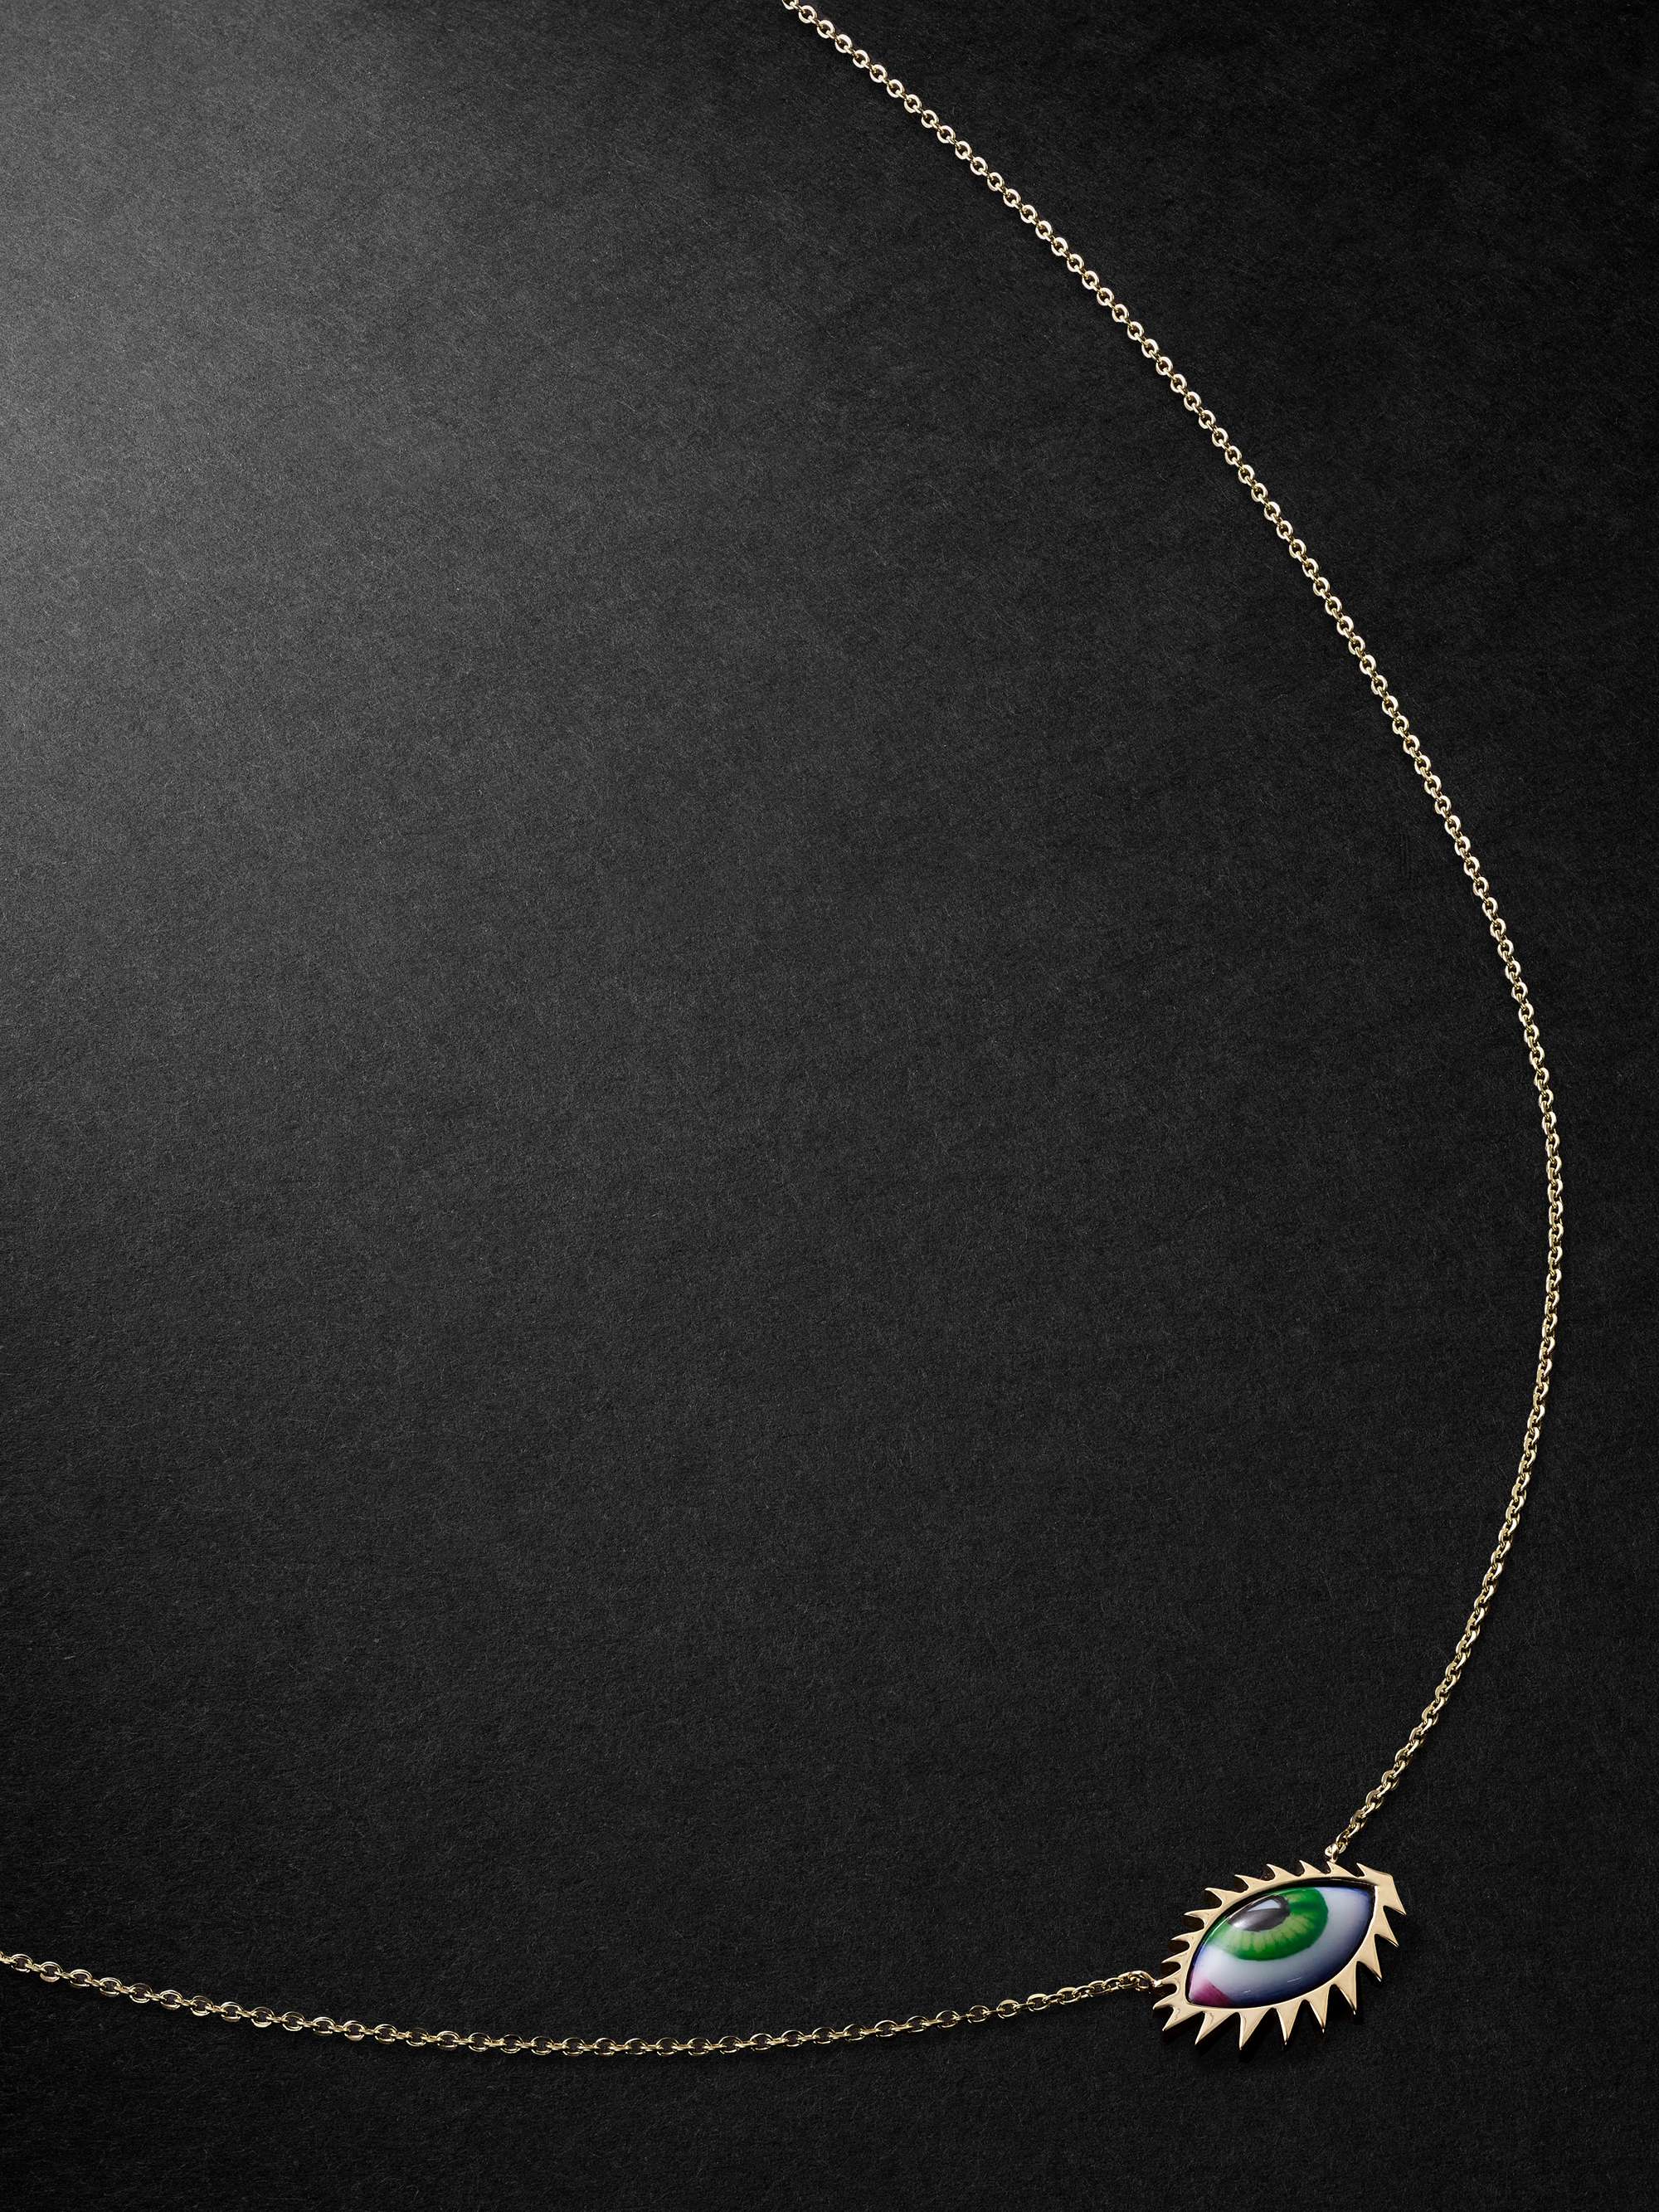 LITO Apollo 13 Petit Vert Gold and Enamel Necklace